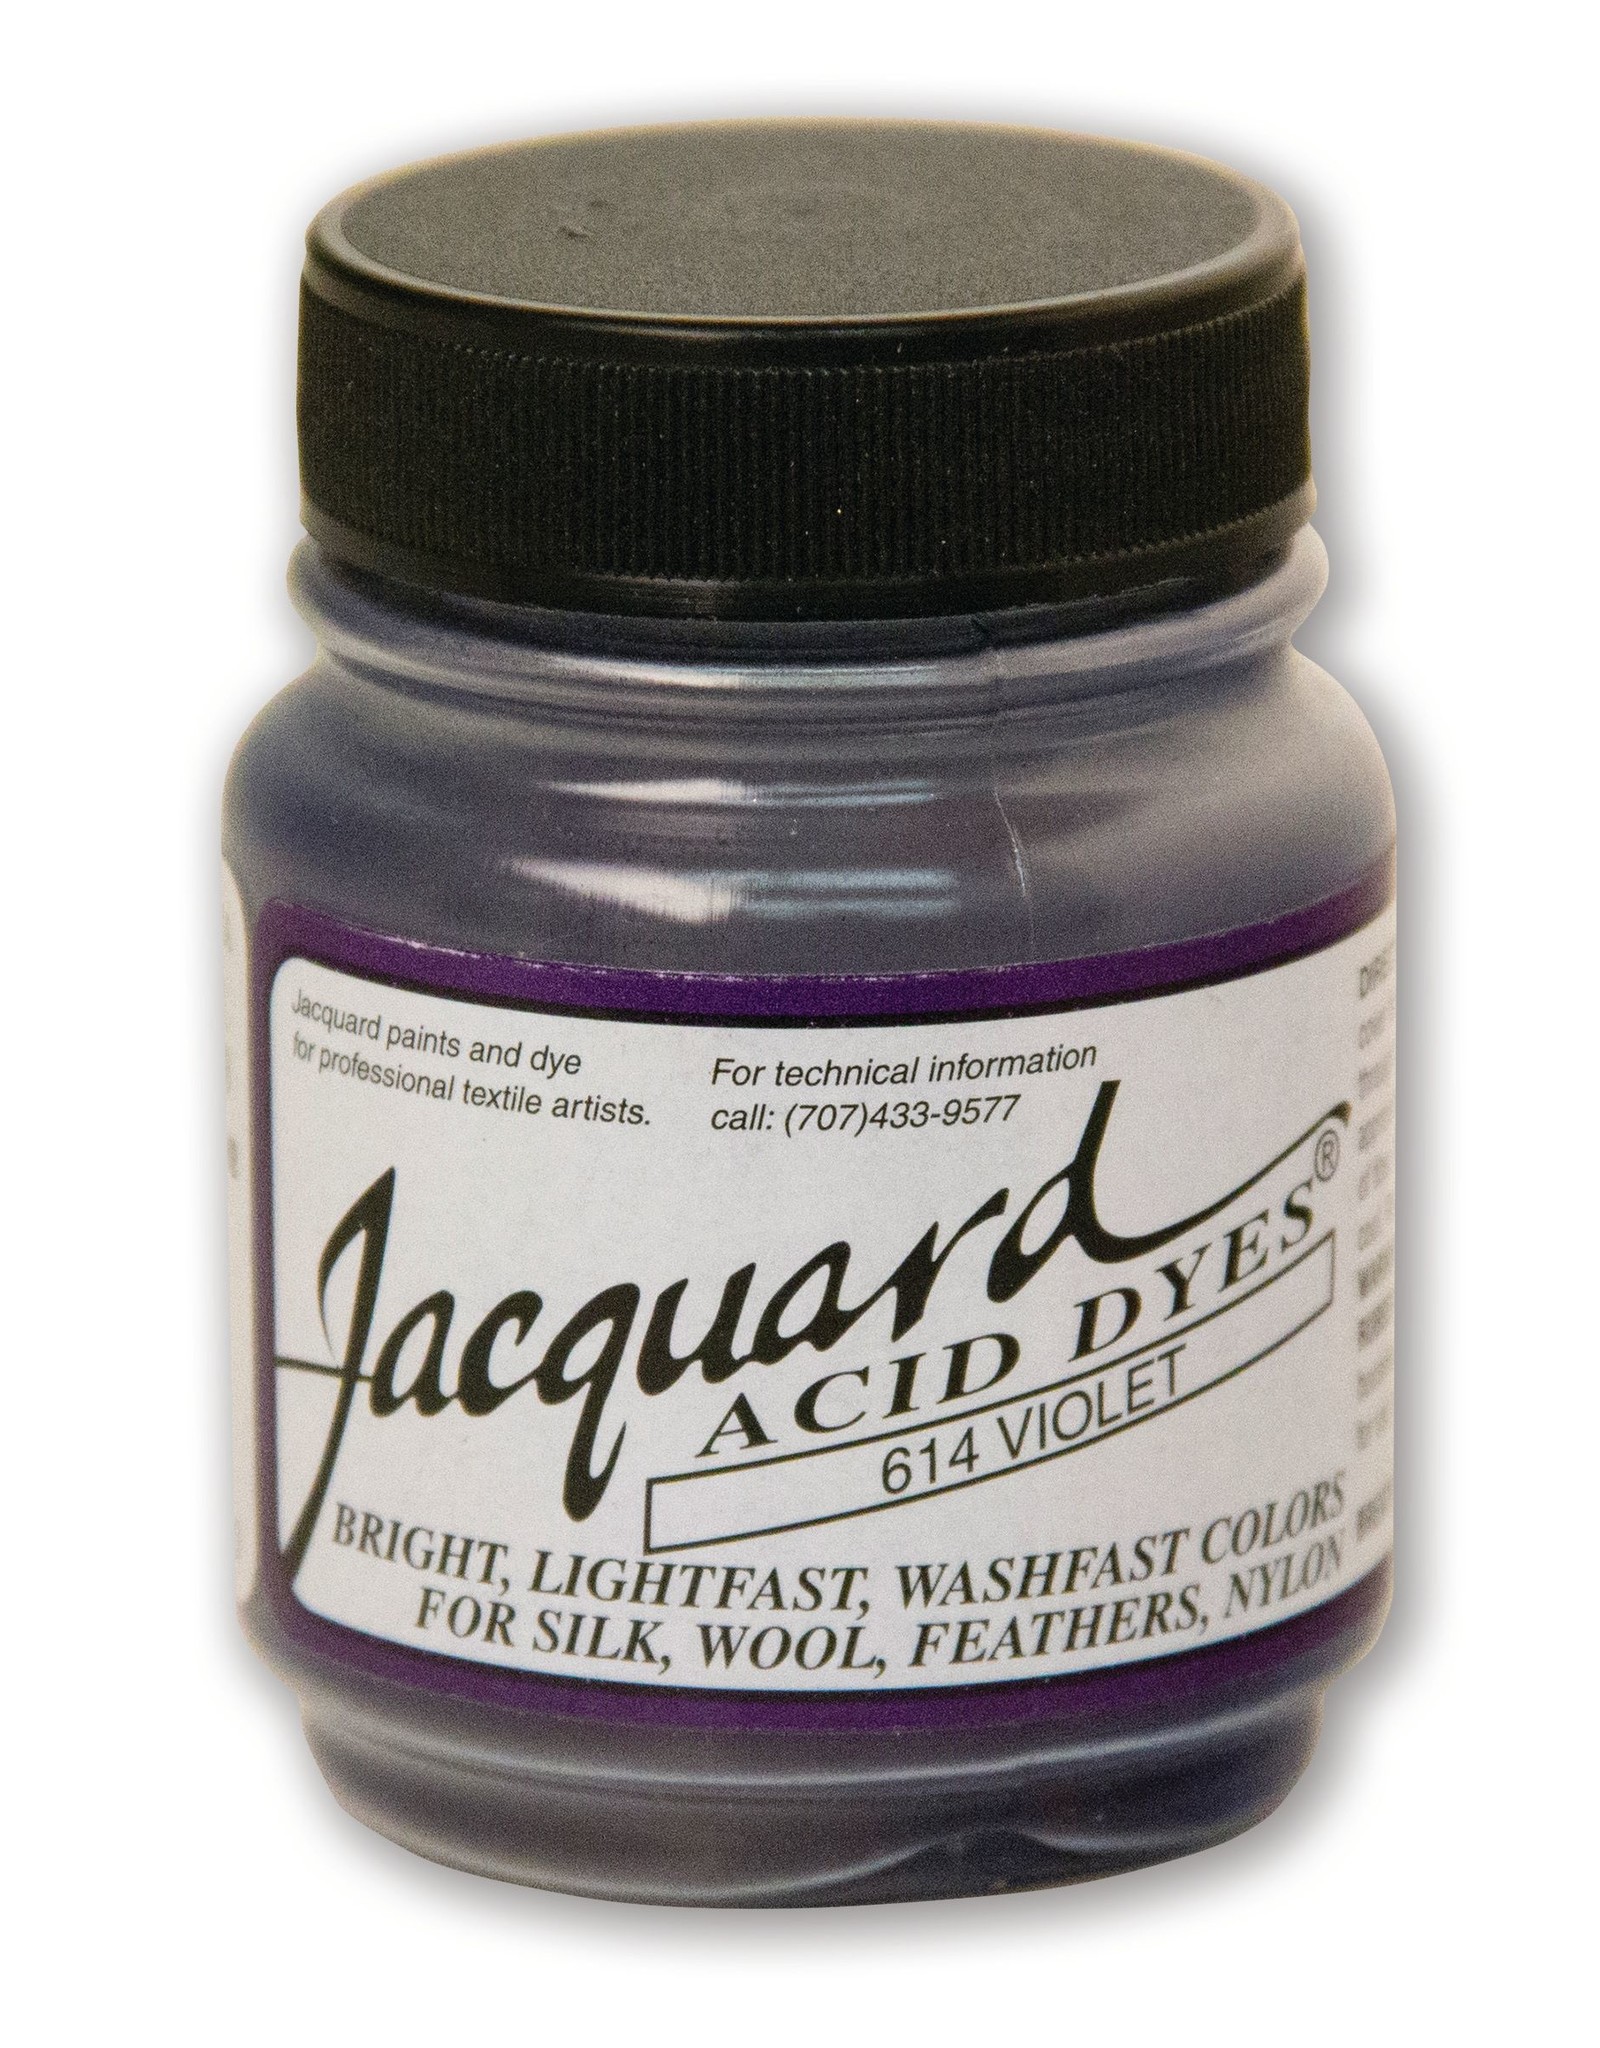 Jacquard Jacquard Acid Dye, #614 Violet ½oz